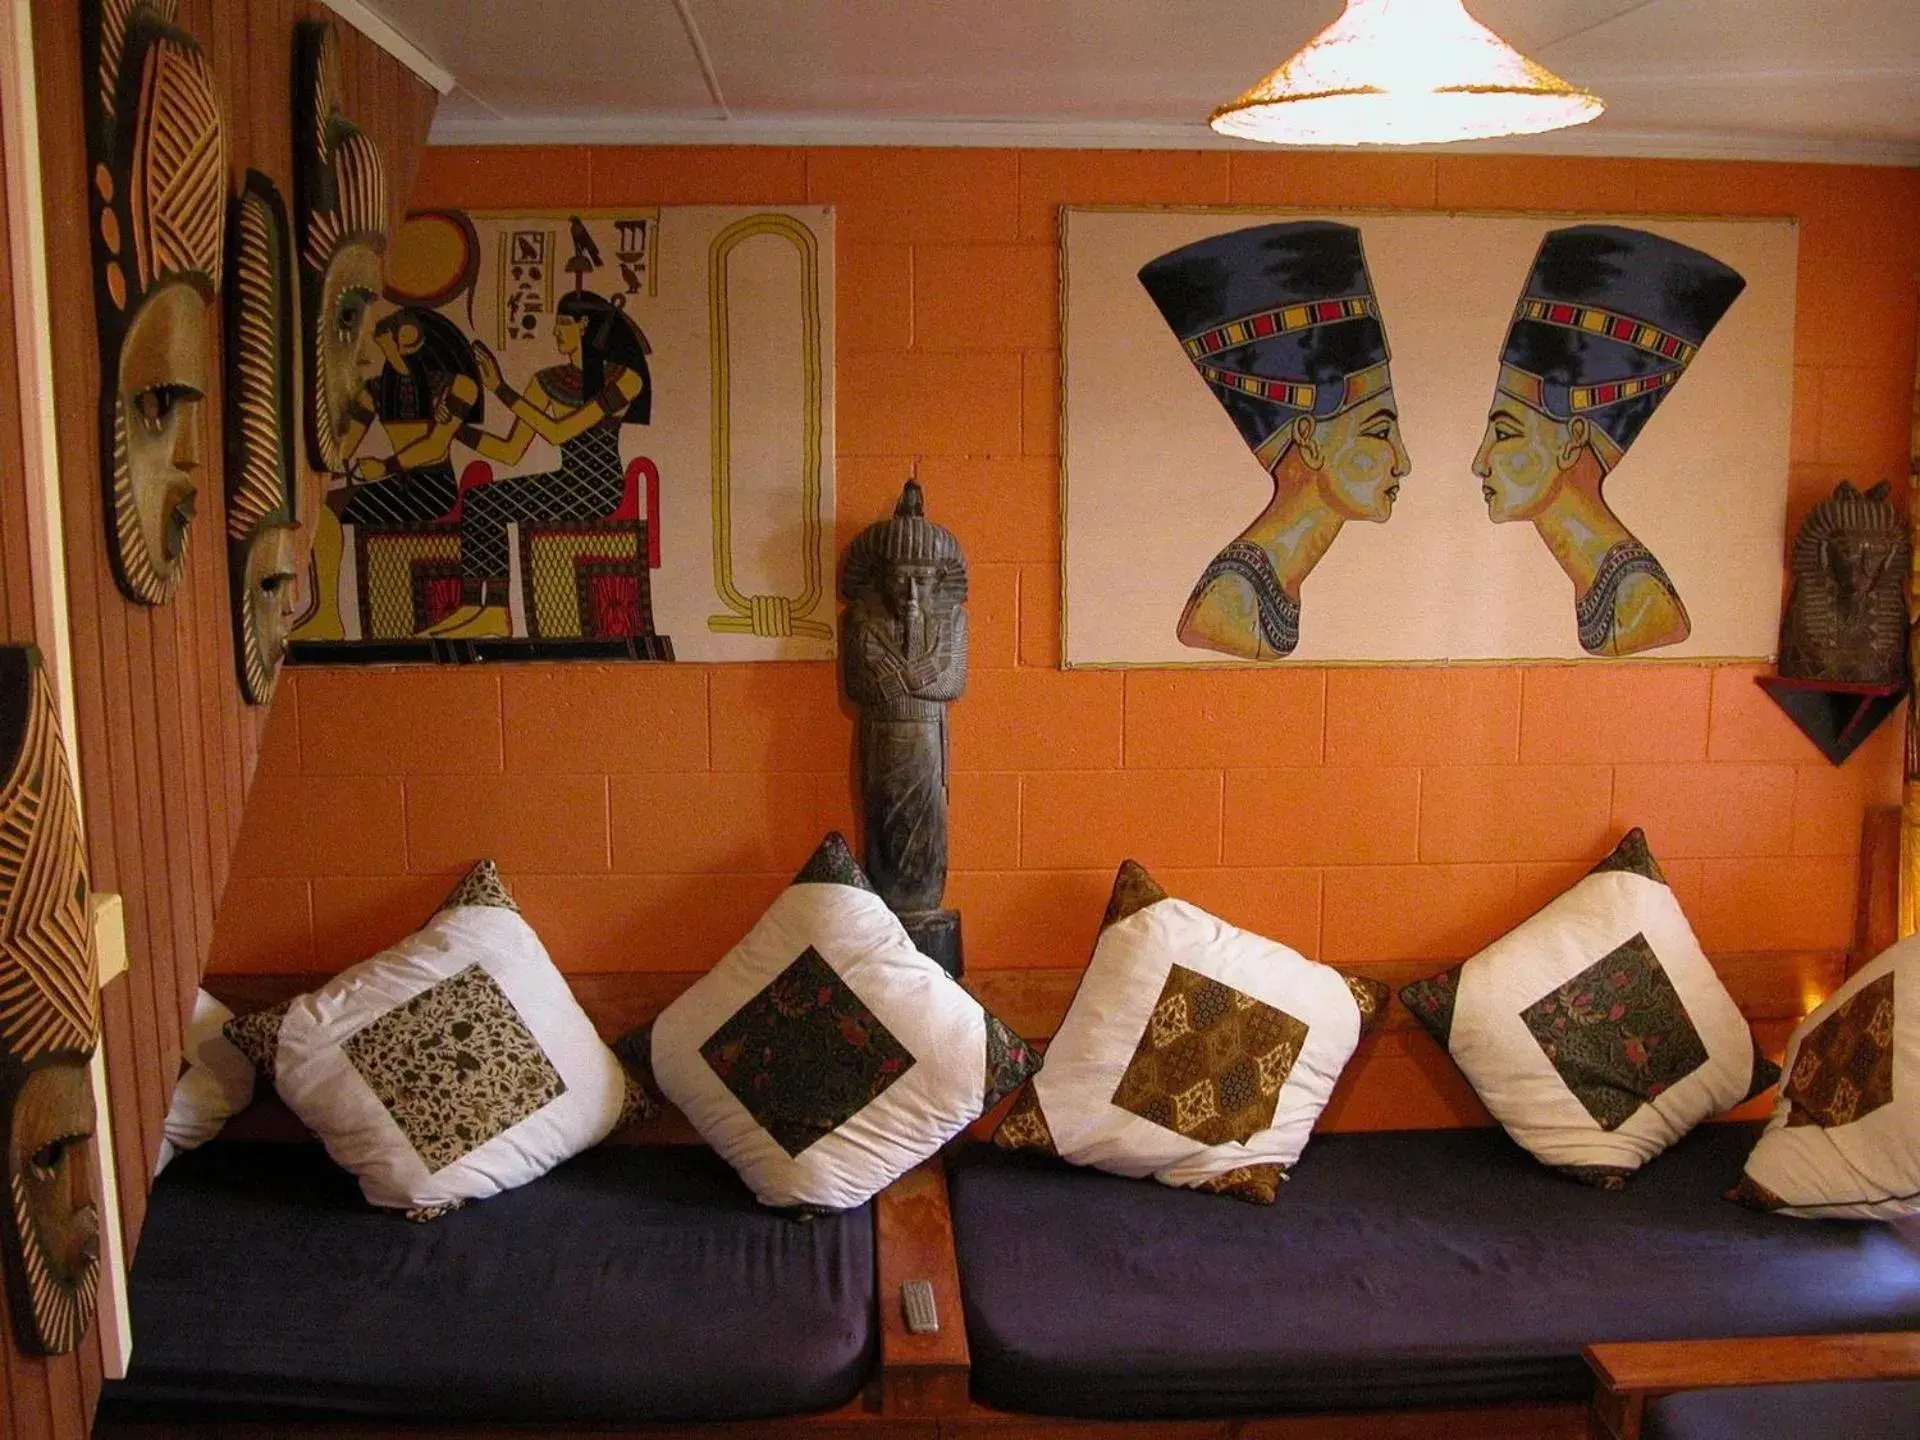 Decorative detail in Global Village Travellers Lodge